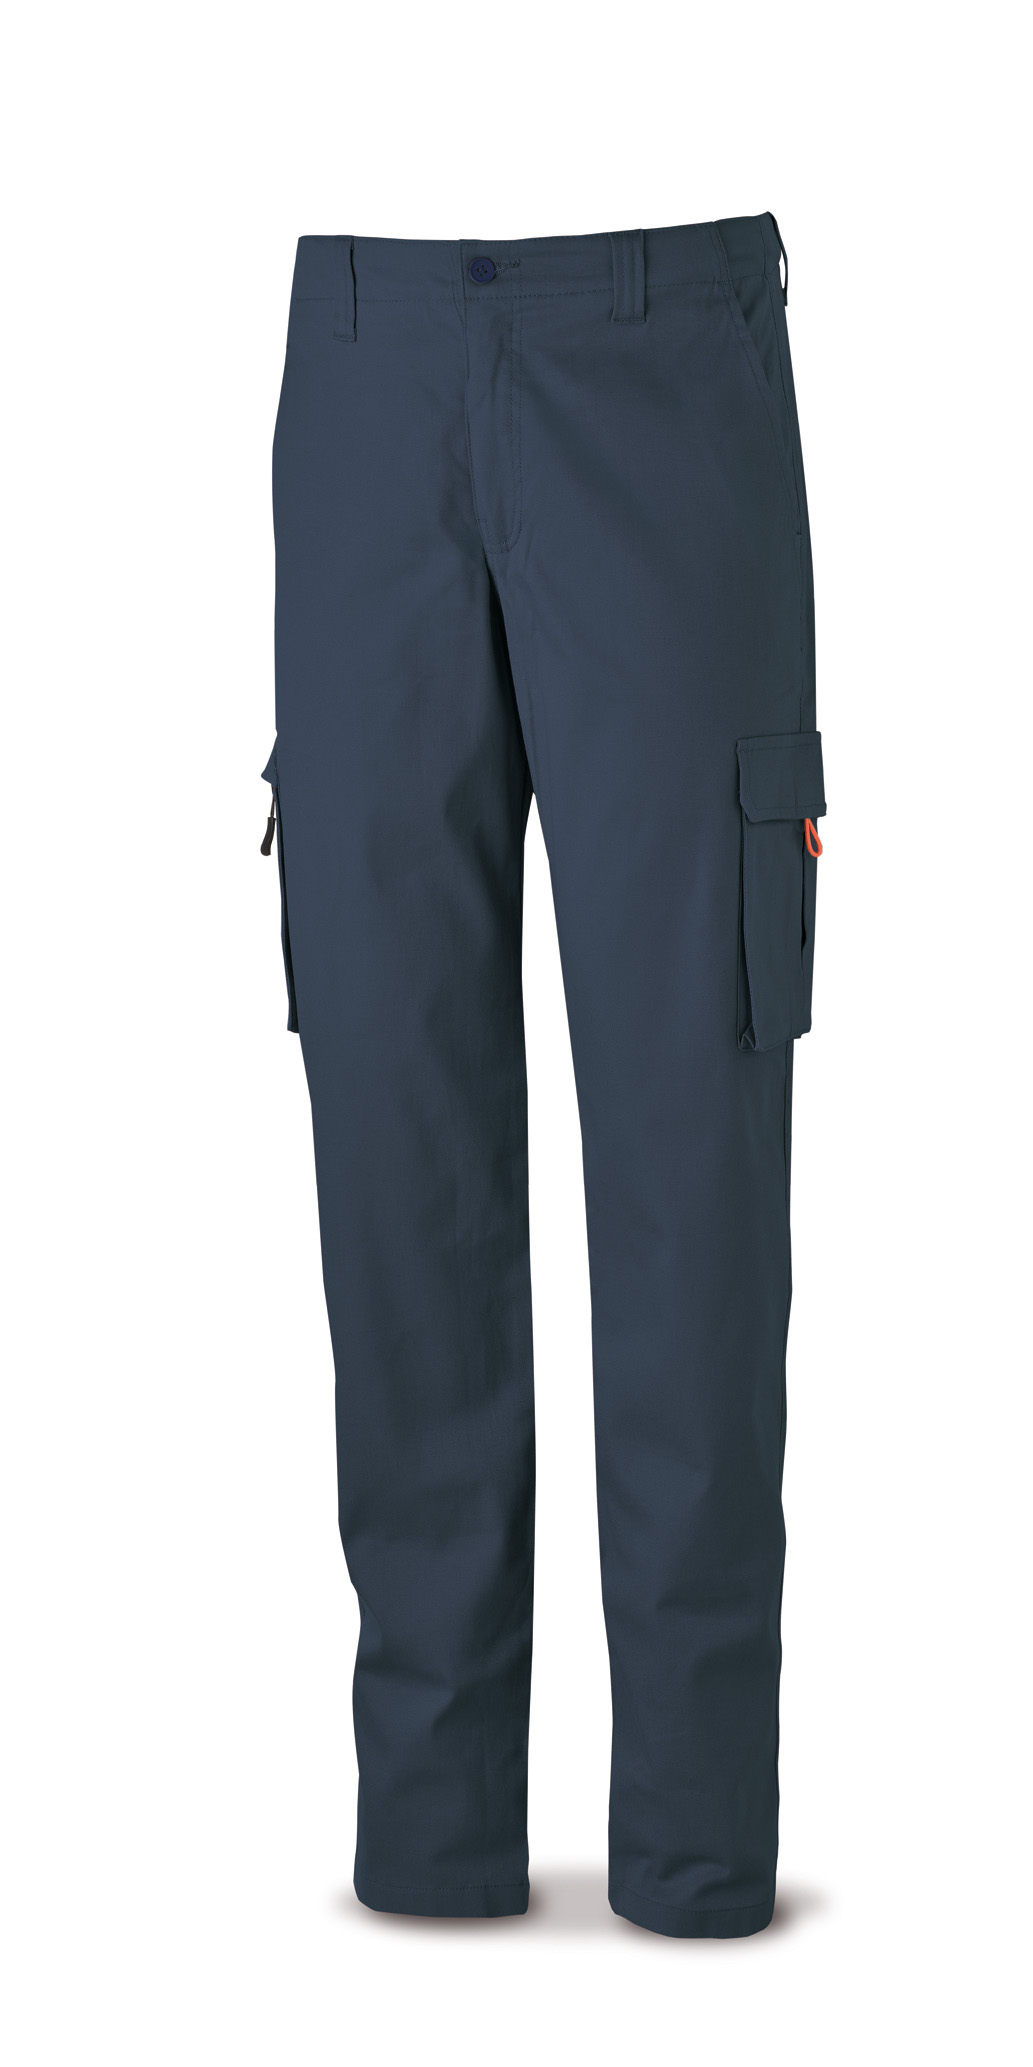 588-PELASRA Workwear Casual Series ELASTIC cotton and Elastane pants. Navy blue.